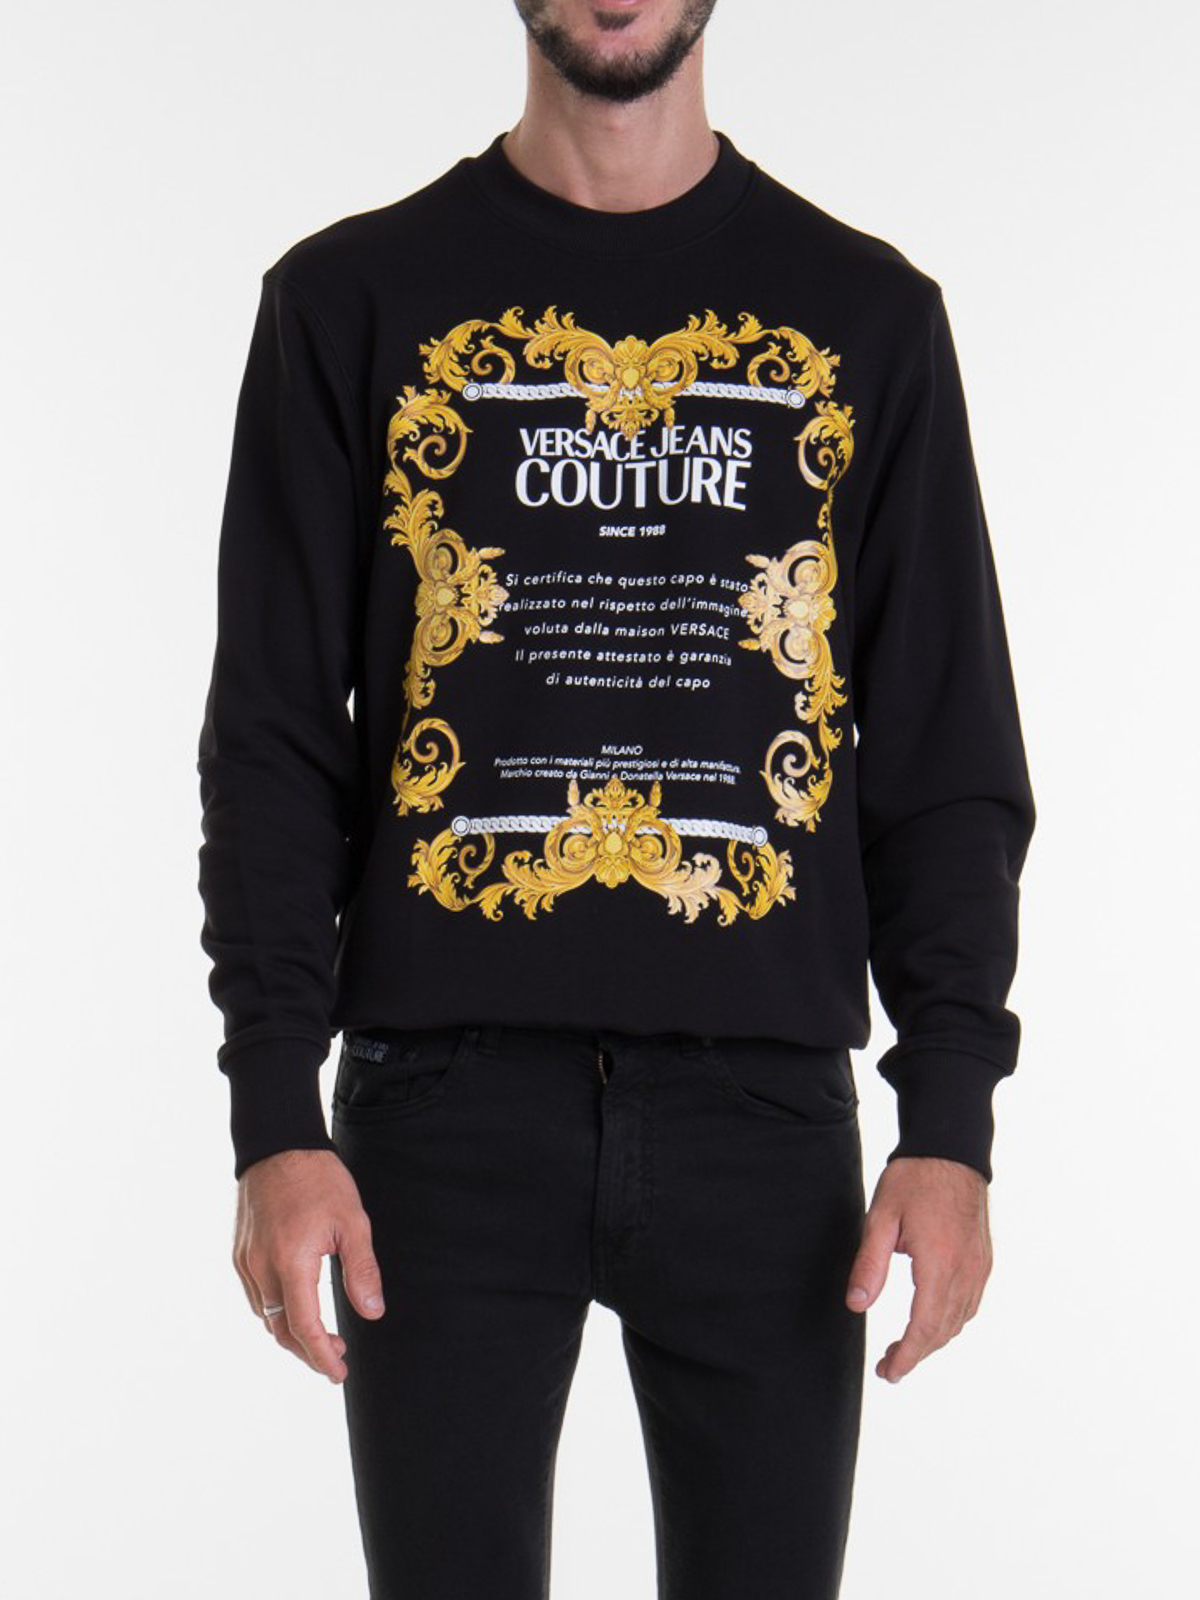 Versace Couture Sweatshirt on Sale, 52 ...